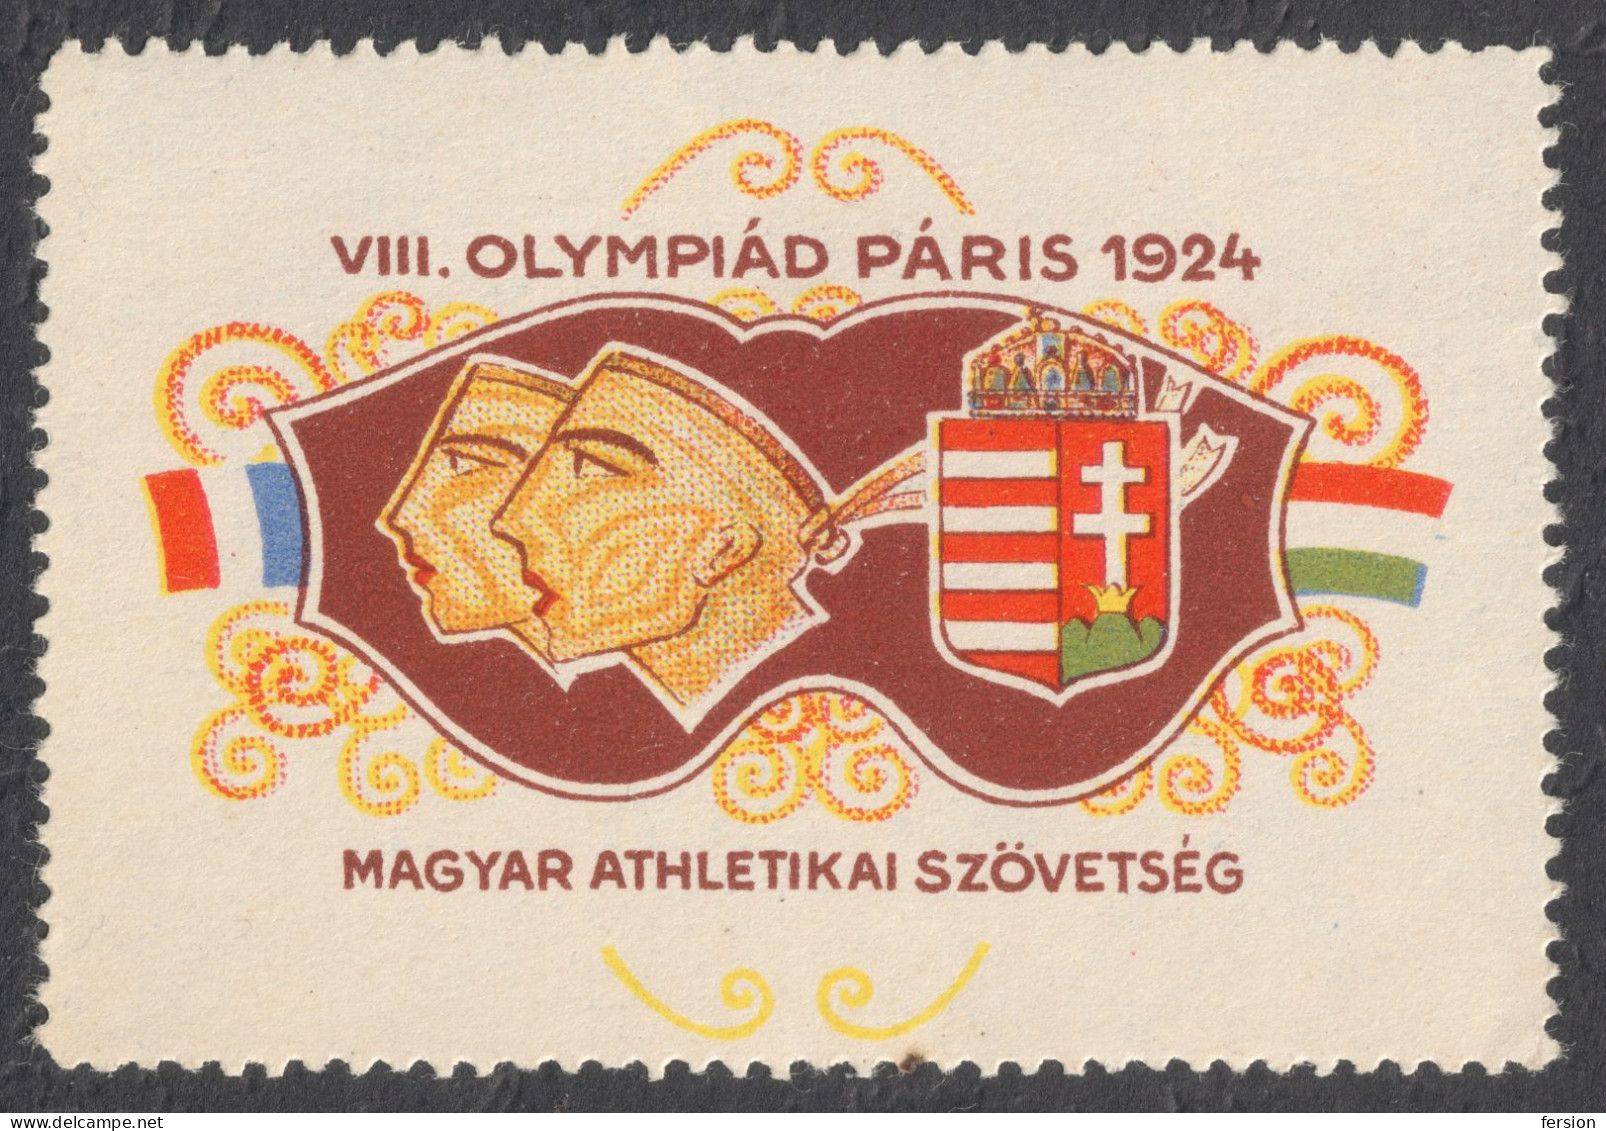 Paris 1924 Olympics Olympic GAMES / France Hungary Athletics MH - LABEL CINDERELLA VIGNETTE FLAG / Coat Of Arms - Verano 1924: Paris